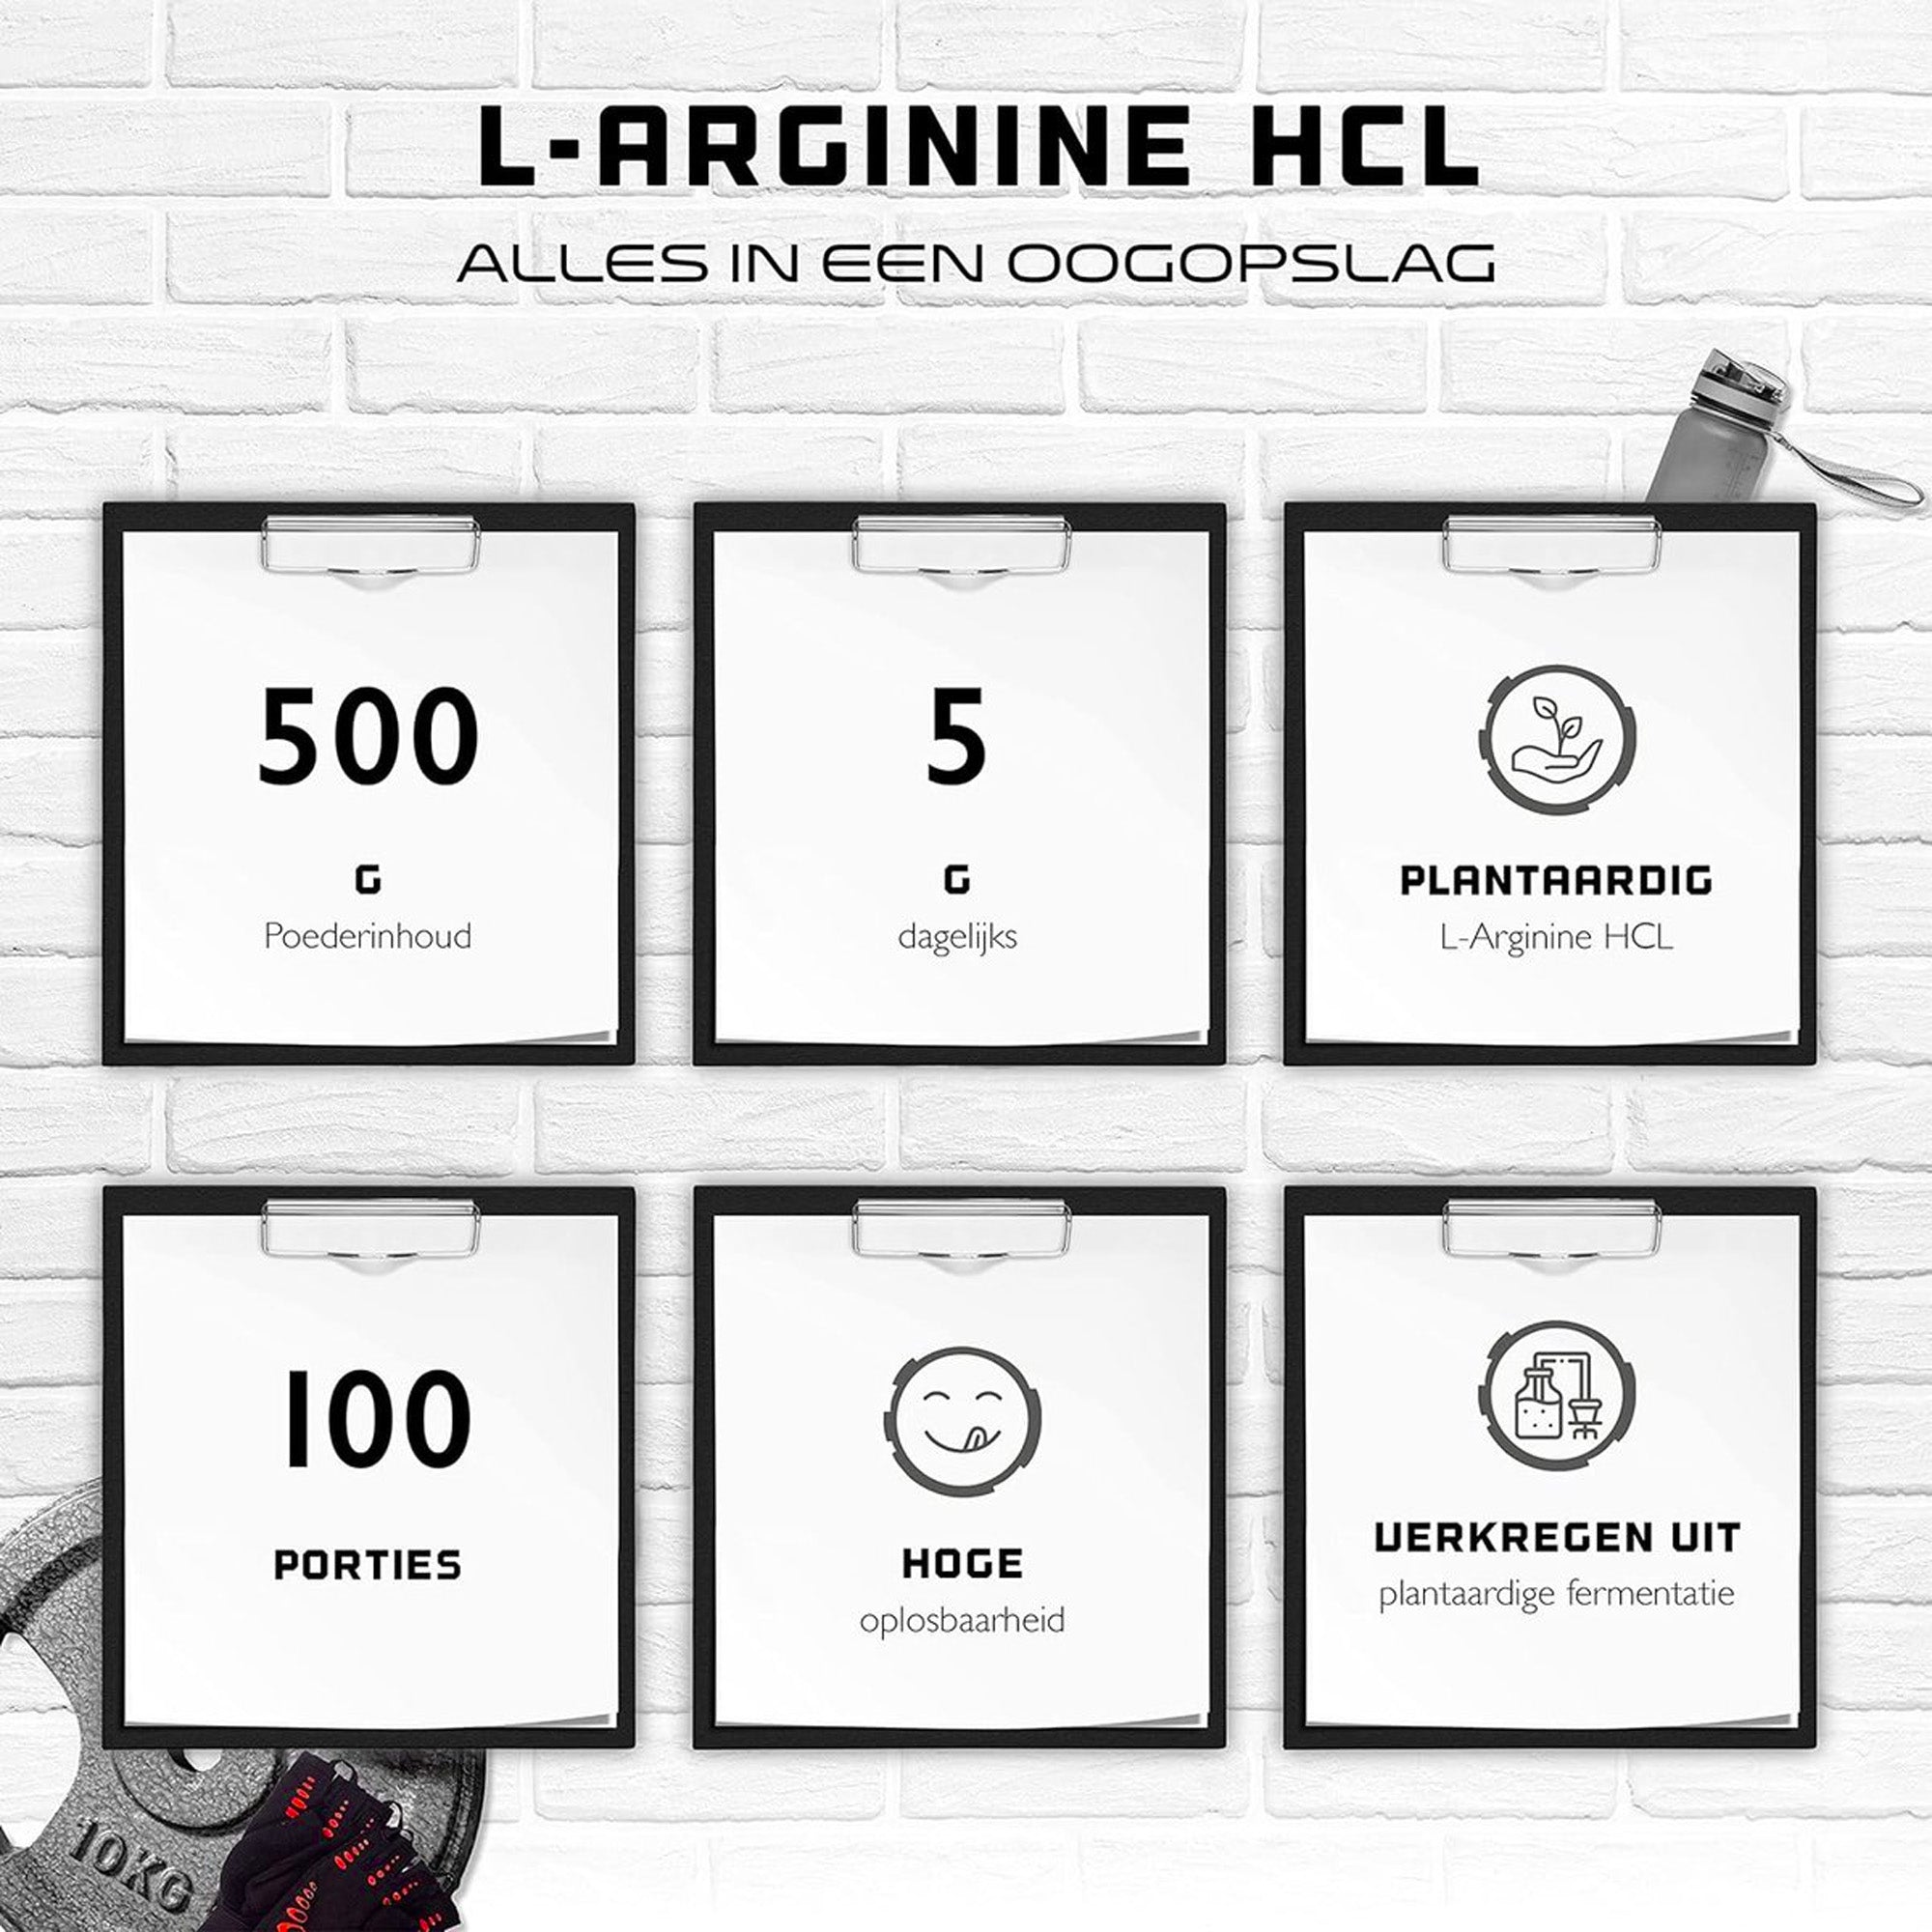 L-Arginine HCL | 500 g | L-Arginine Hydrochloride | Premium: plantaardige L-Arginine HCL